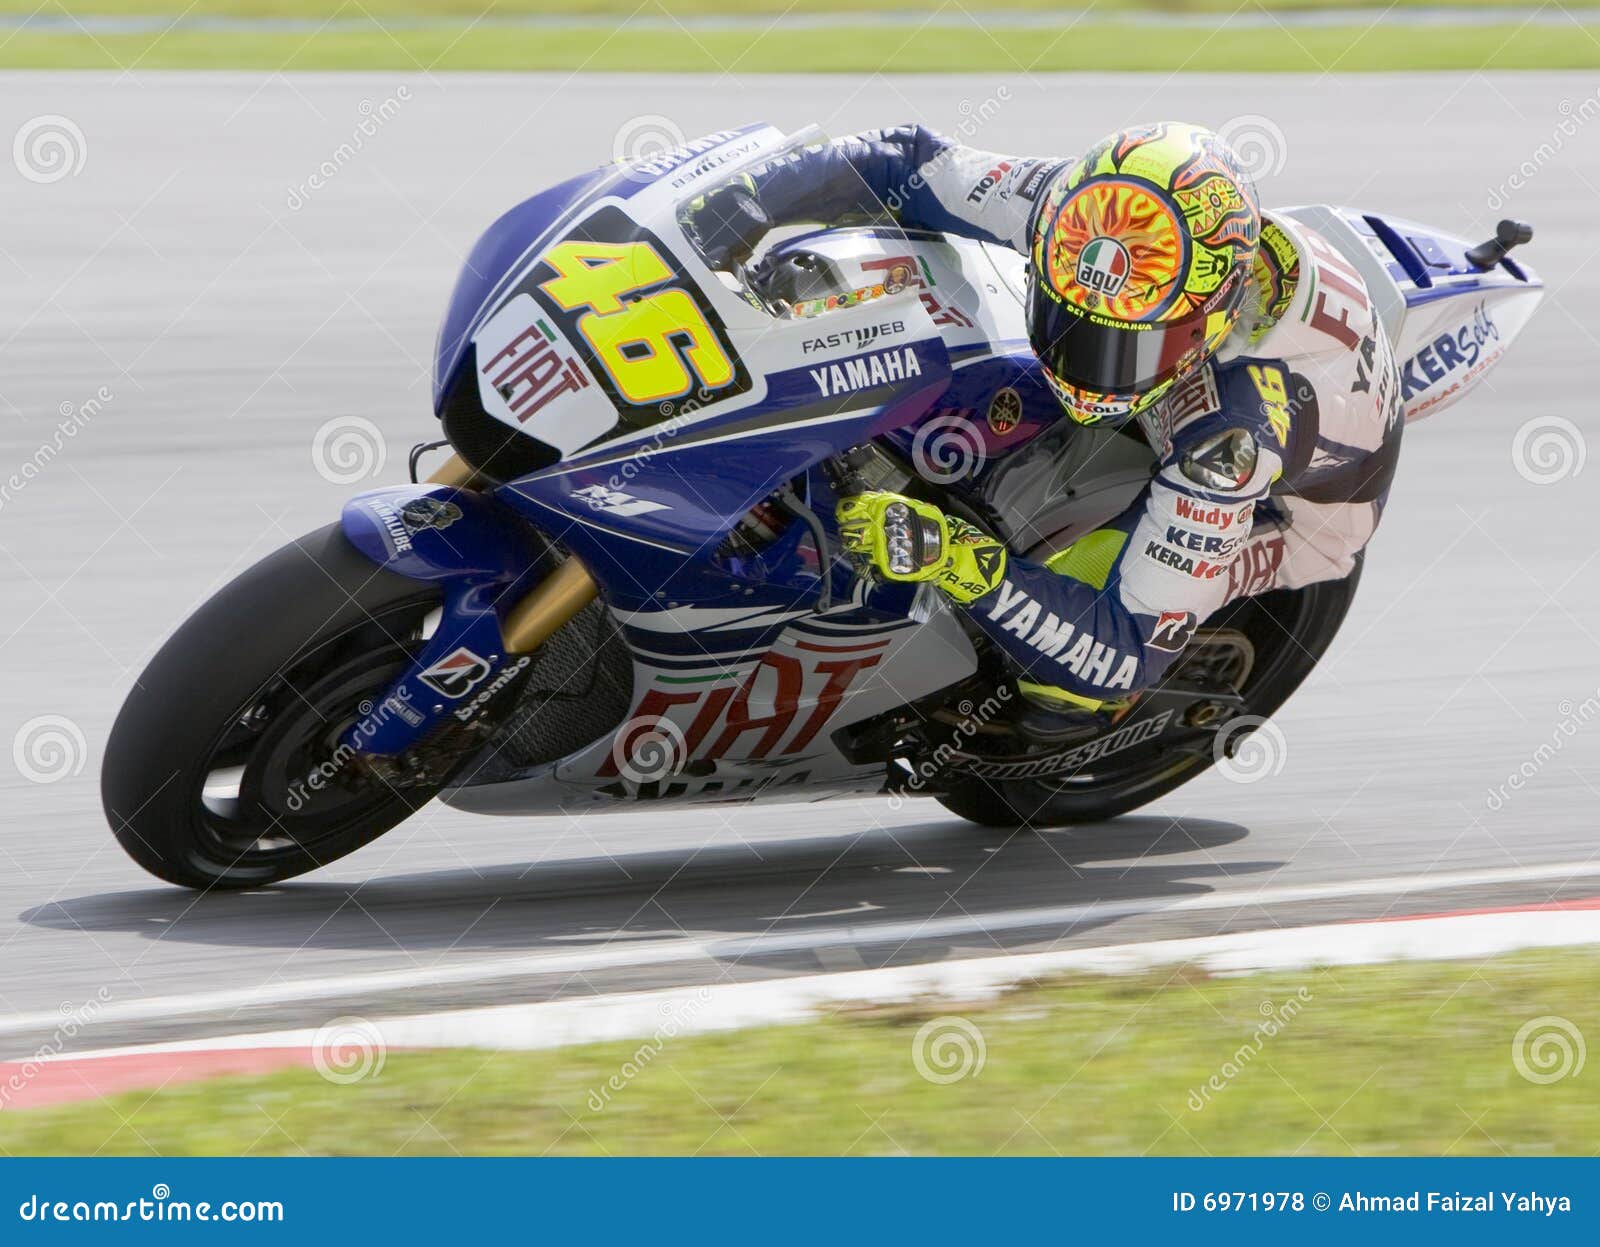 Italian Valentino Rossi of Yamaha Team Editorial Stock Photo - Image of malaysia, grand: 6971978